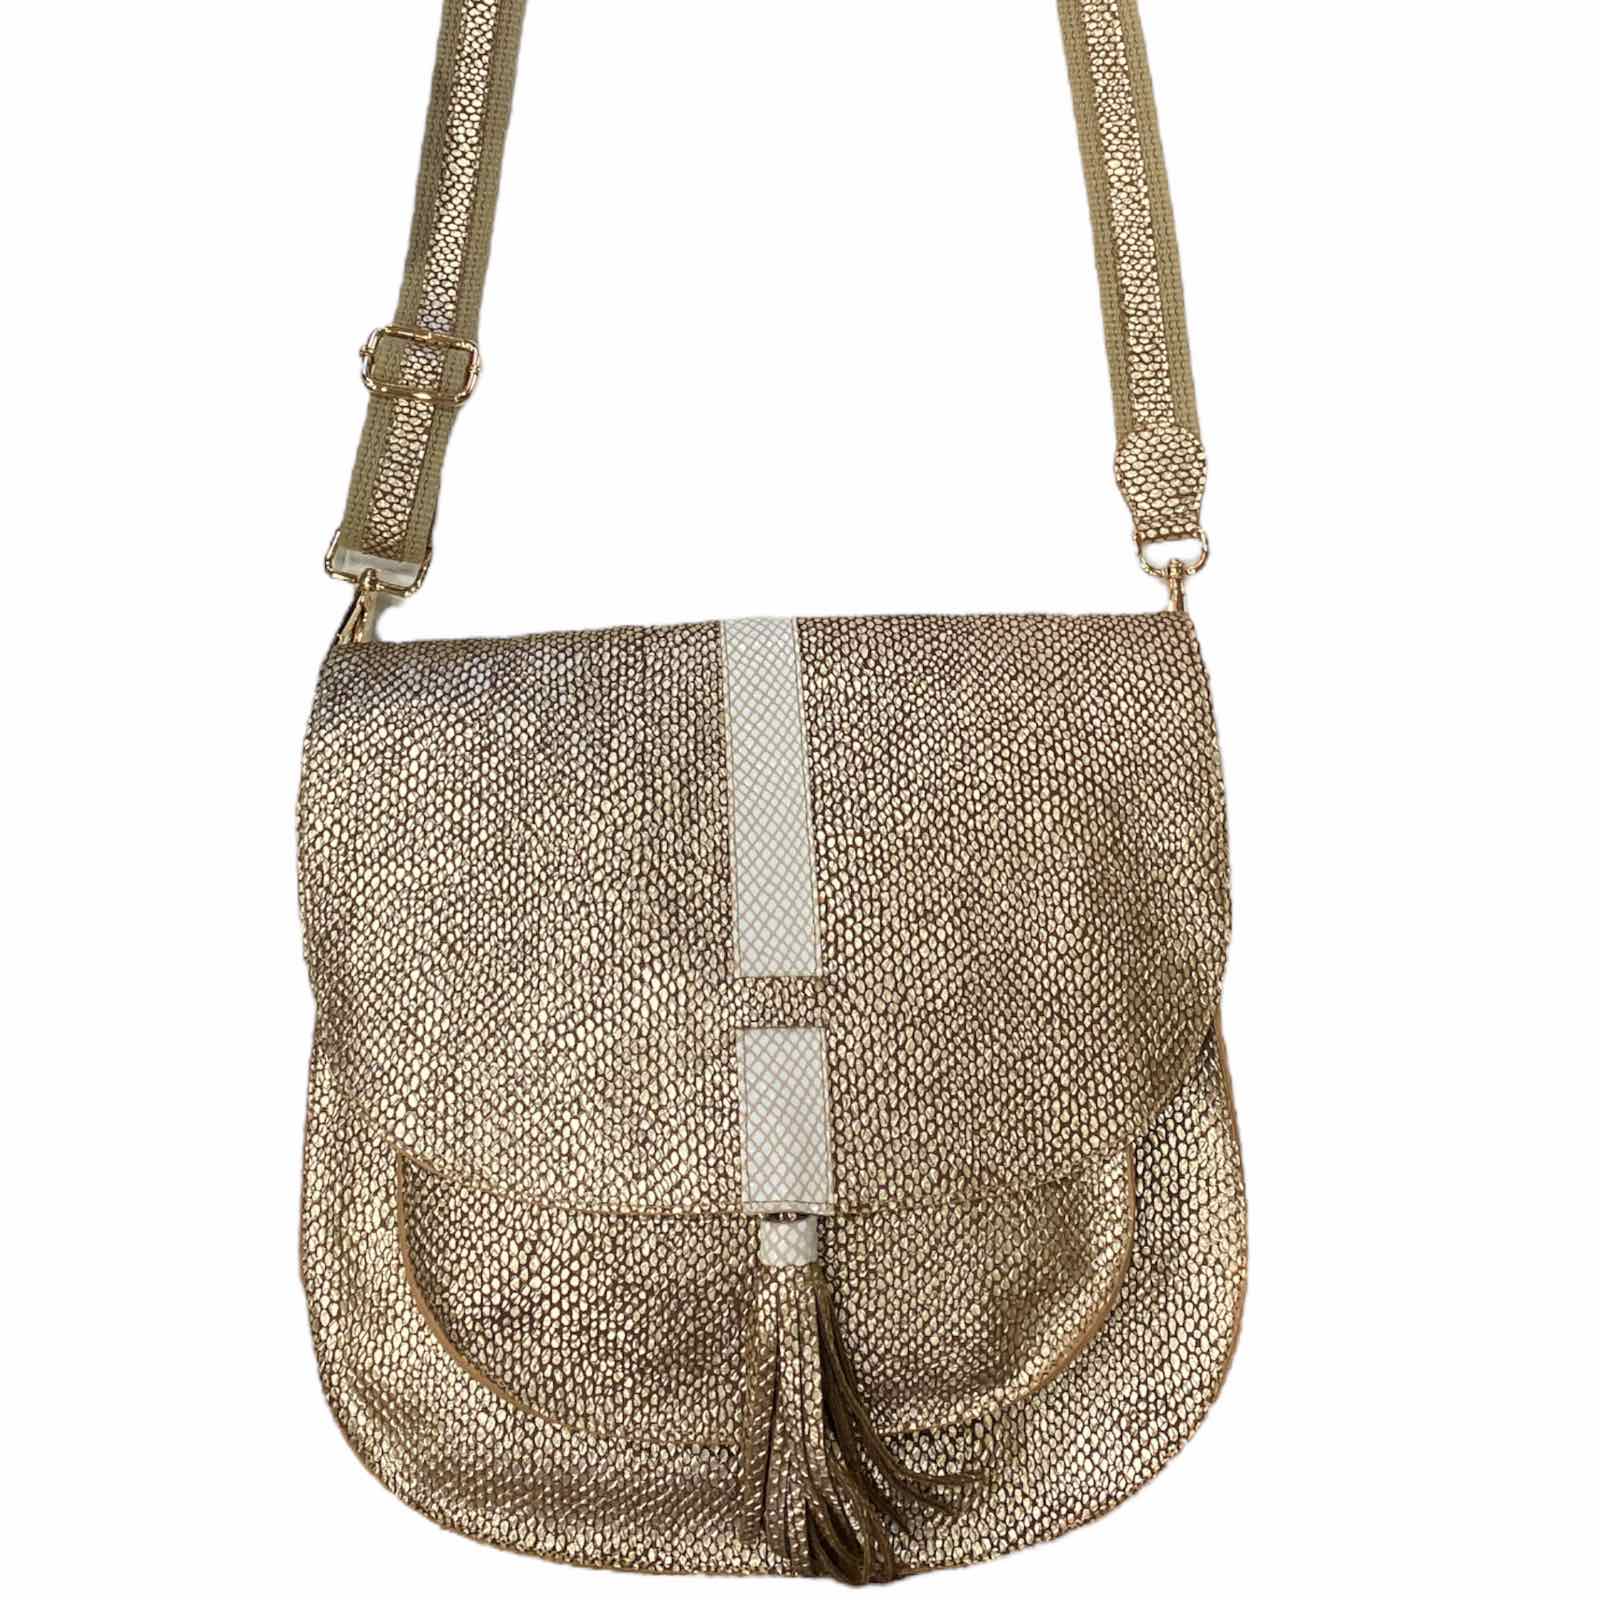 Lara L. Gold leather messenger bag with white details